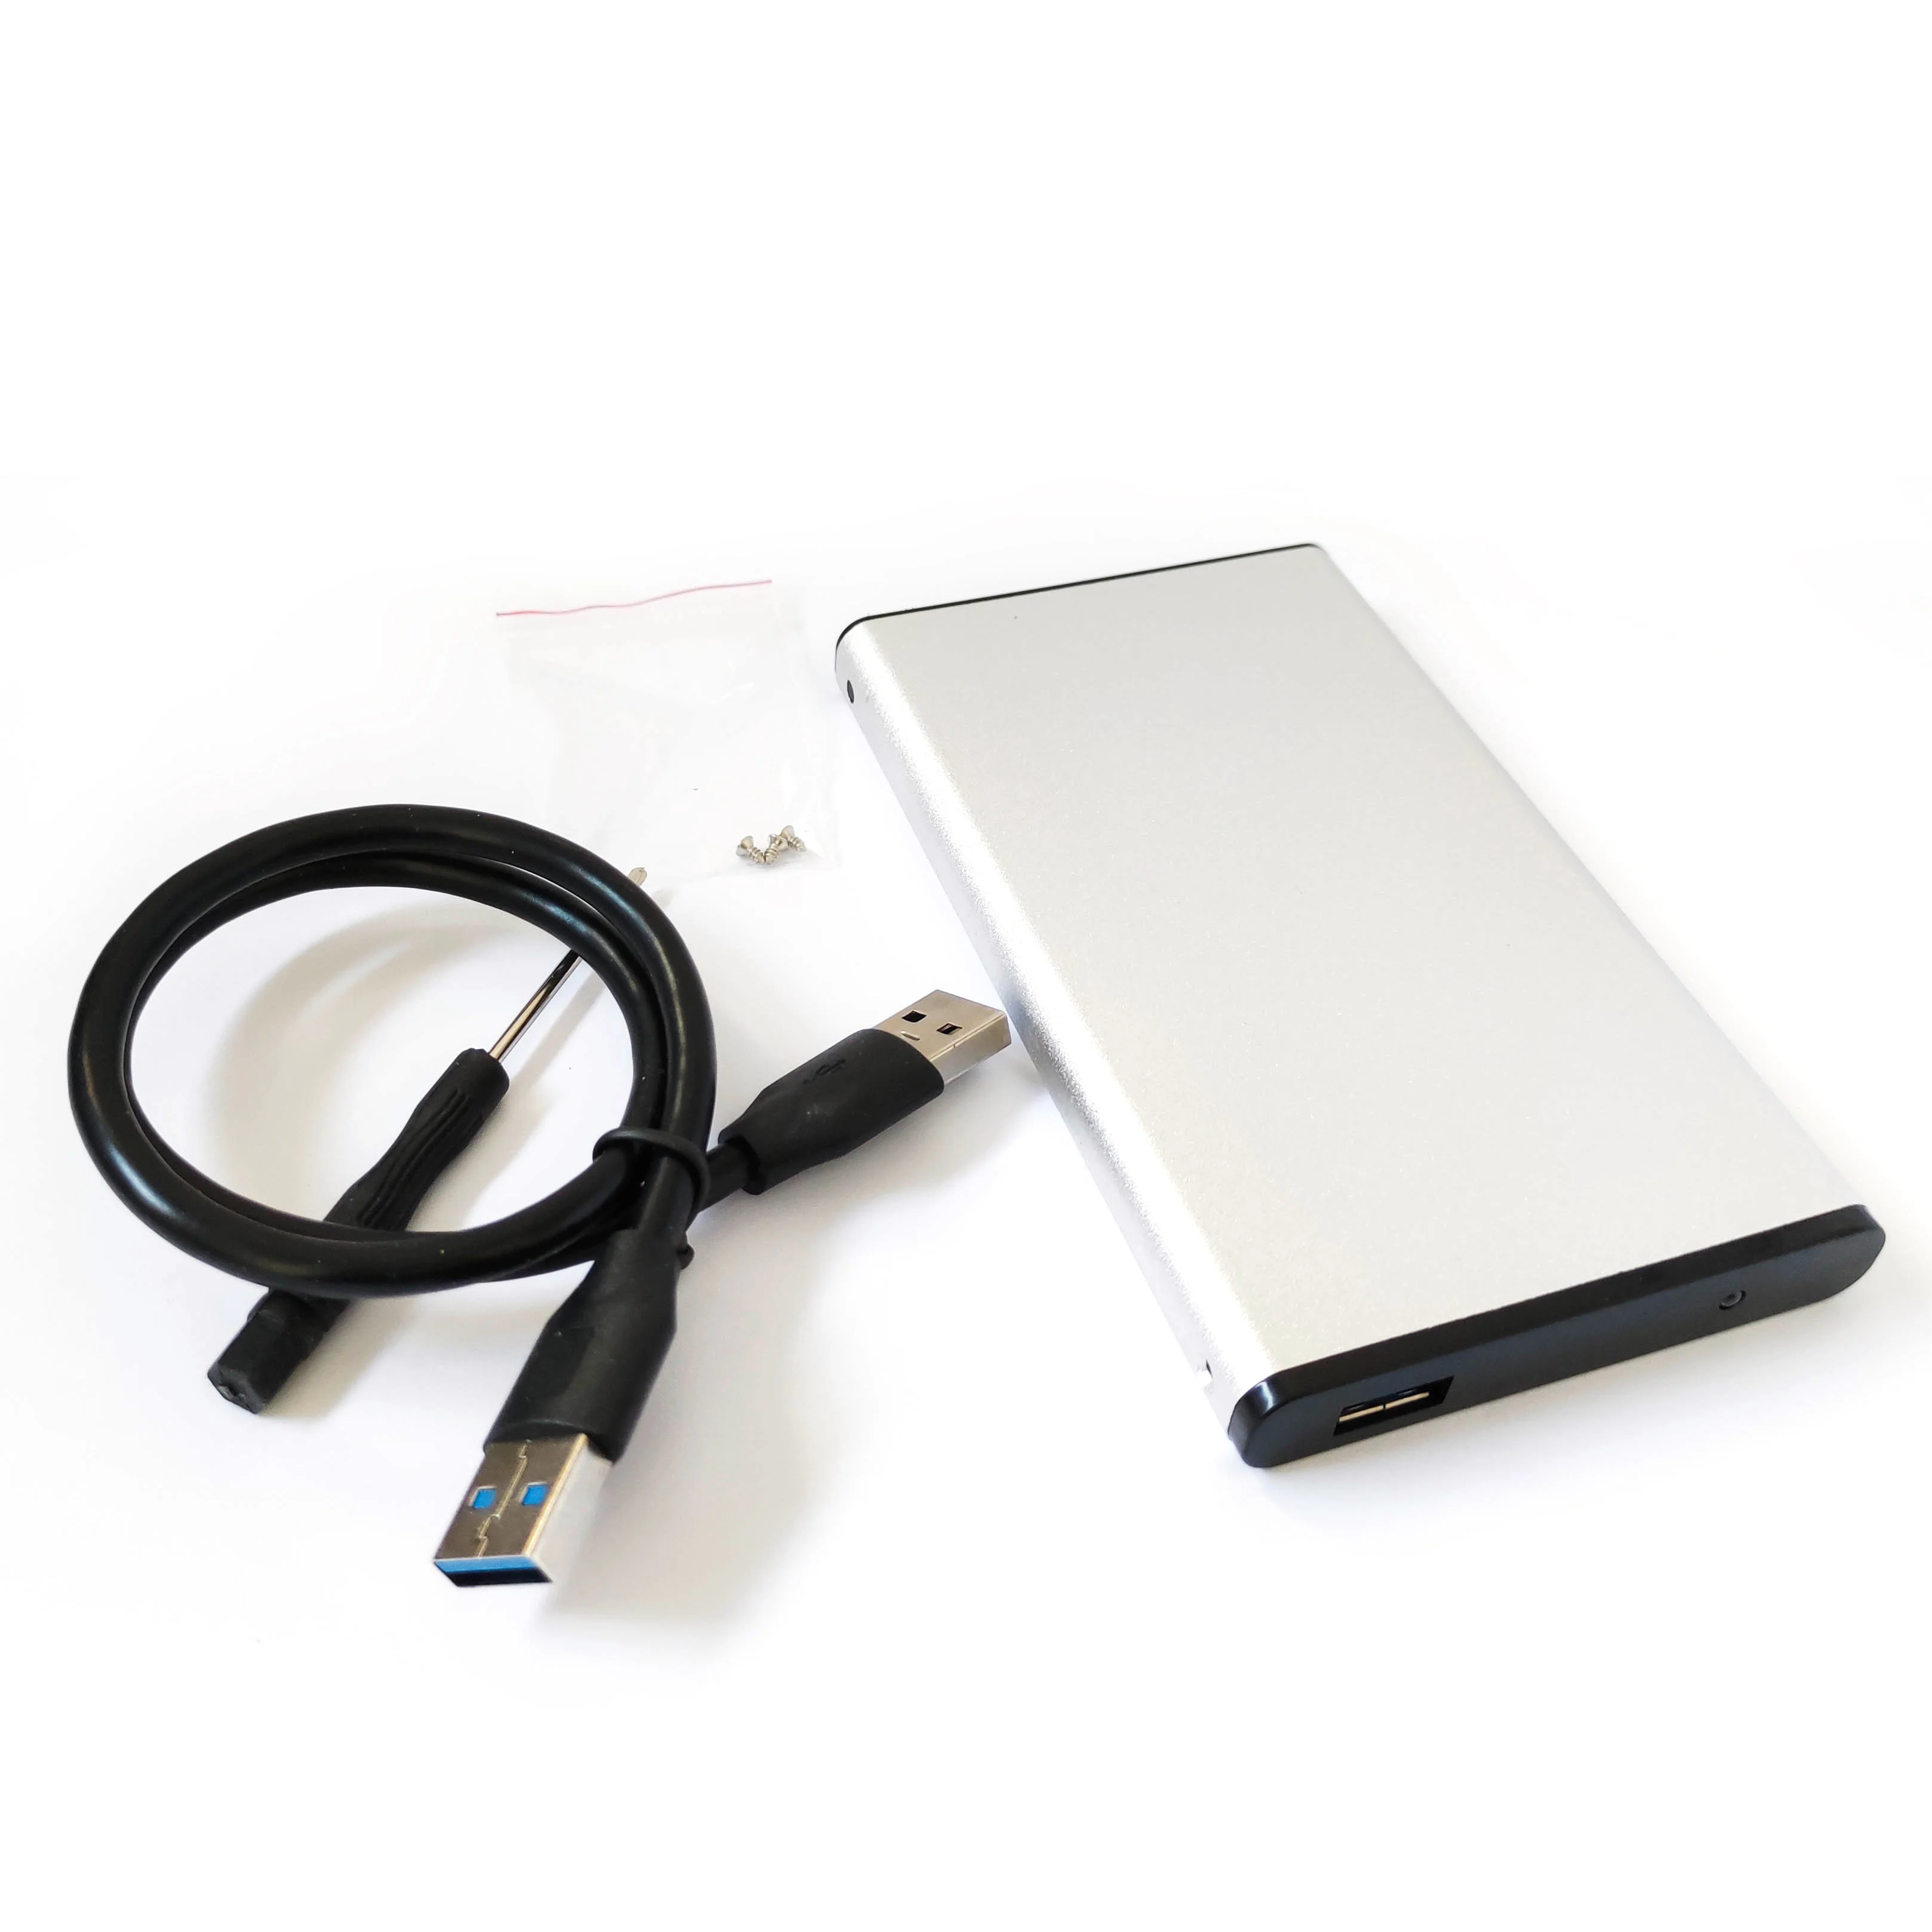 For 2.5" 9.5mm 7mm SSD HDD SATA I II III External HDD SATA Case USB 3.0 Enclosur 